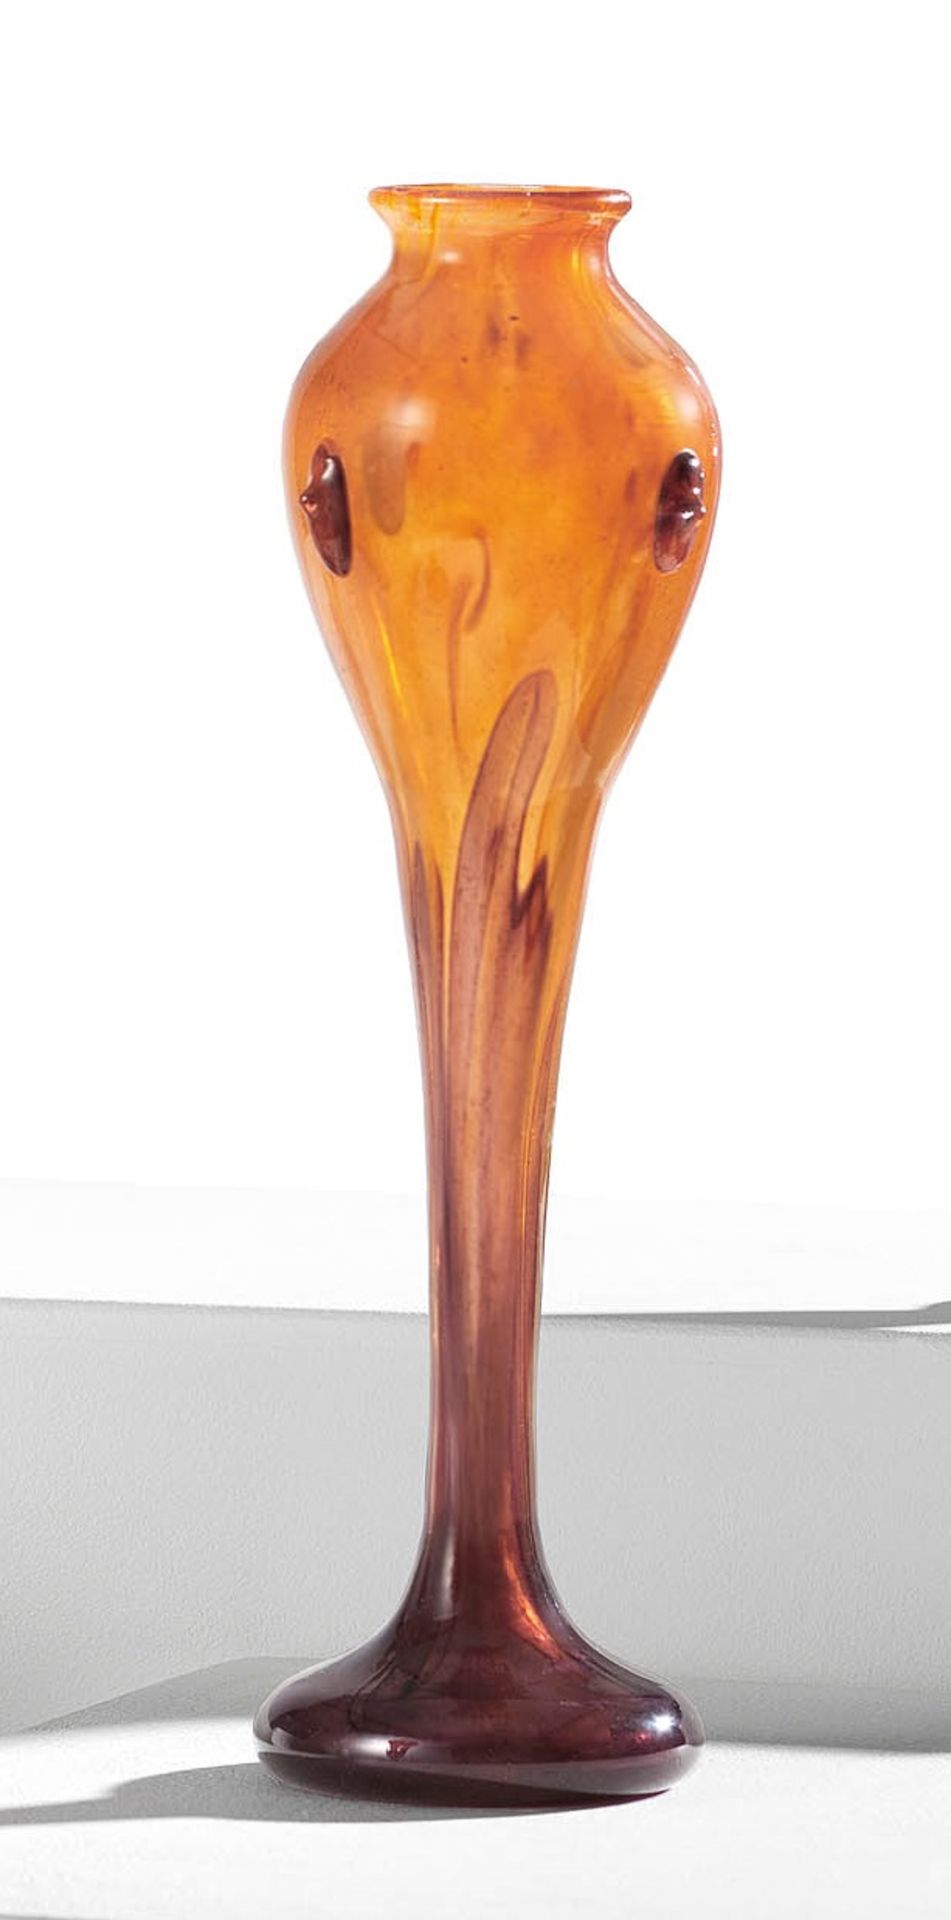 Slim baluster vase with studs